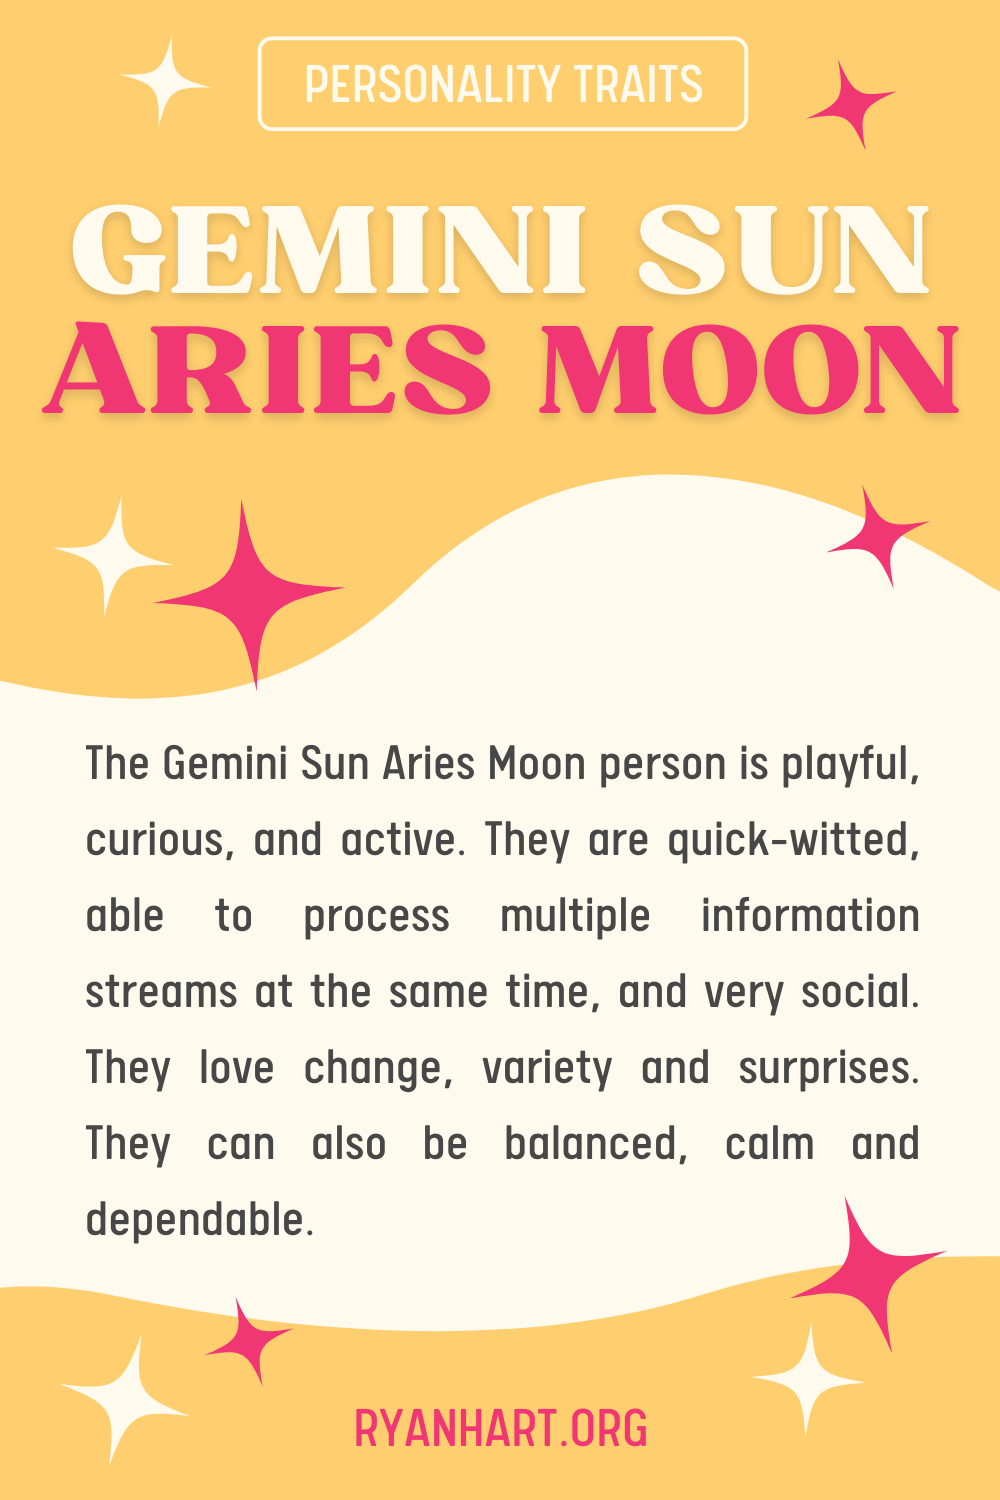 Gemini Sun Aries Moon Description